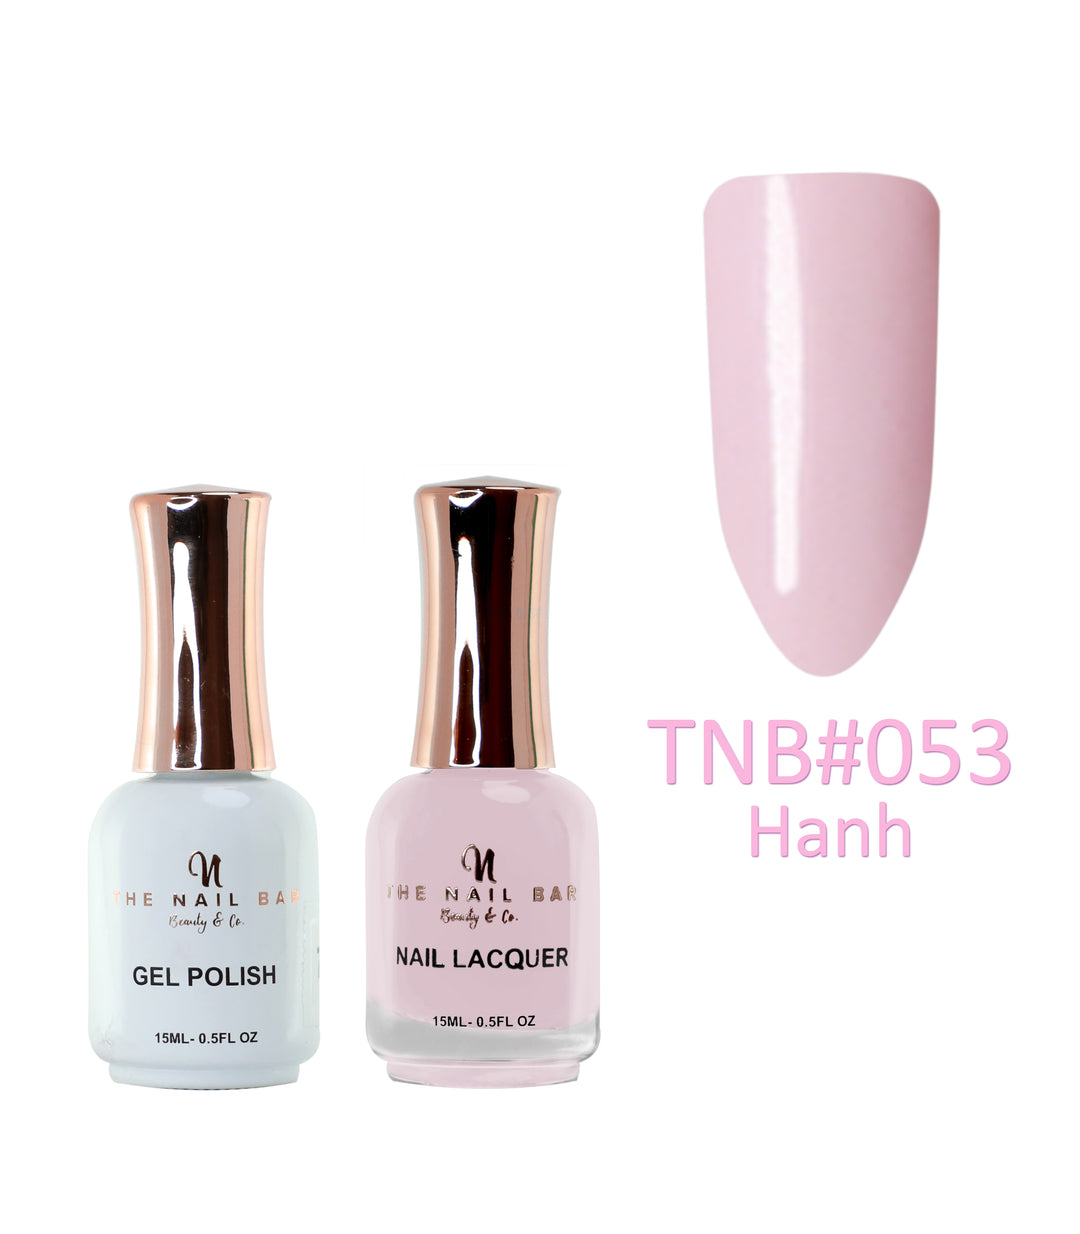 Dual Polish/Gel colour matching (15ml) - Hanh - The Nail Bar Beauty & Co.